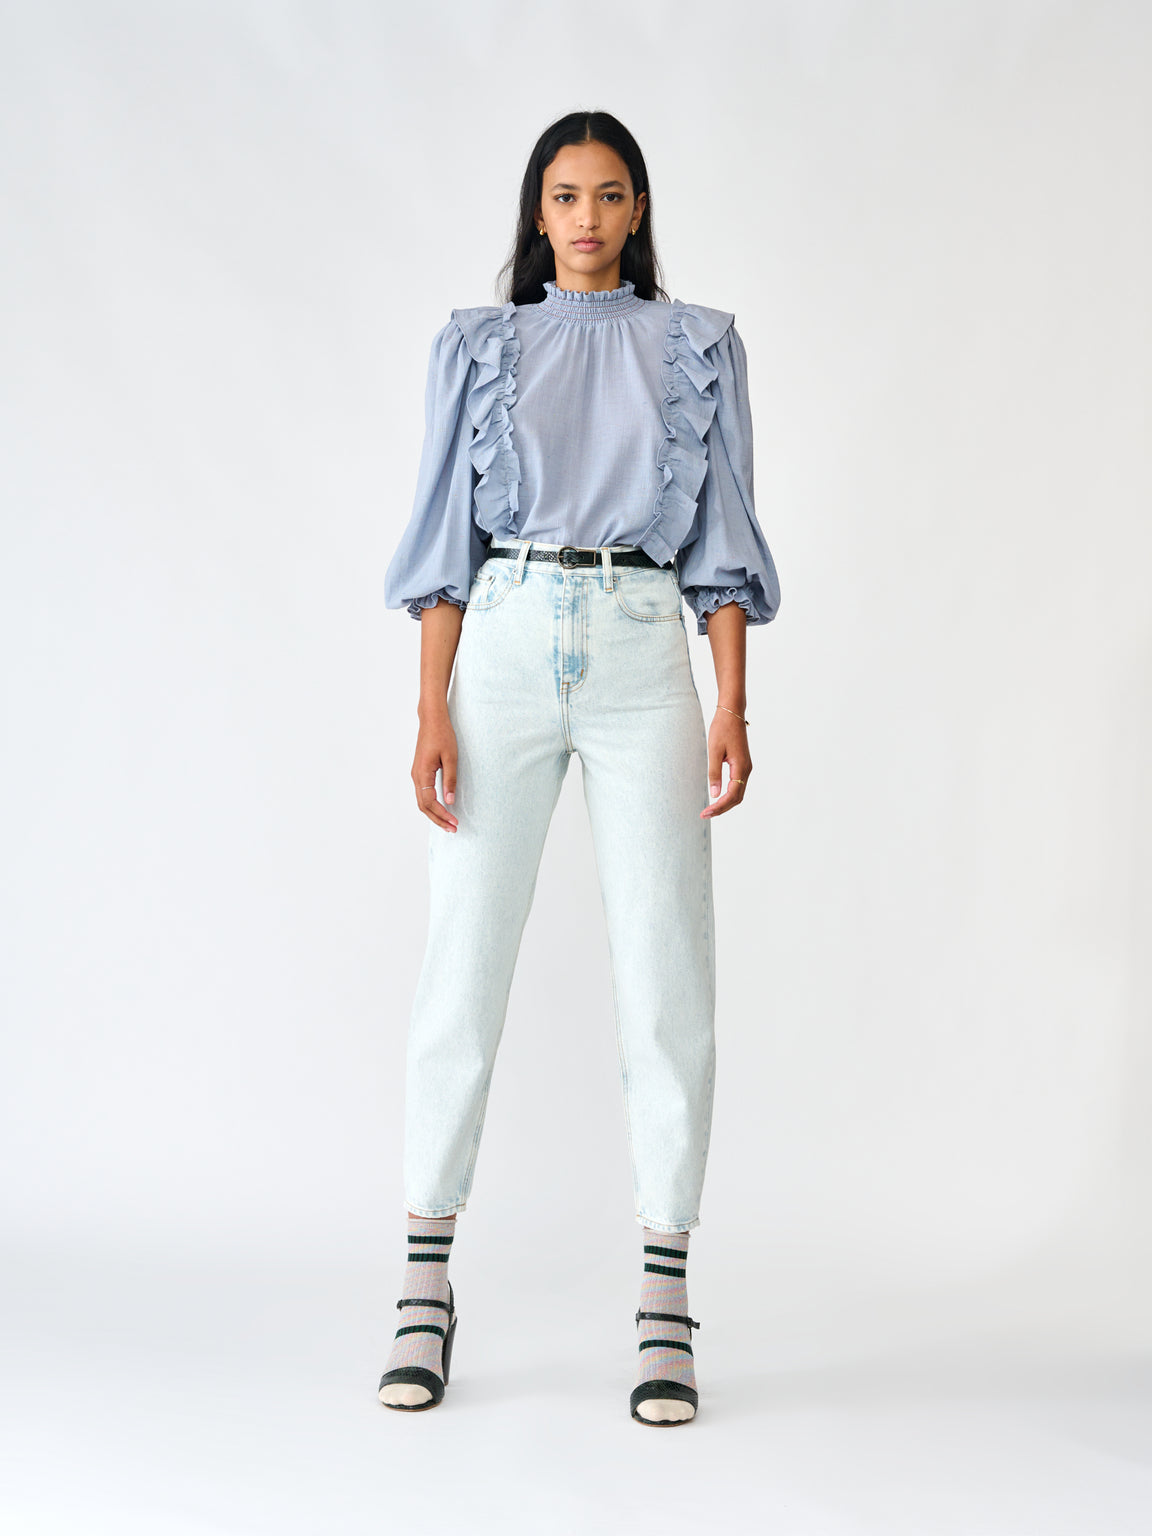 Pretender Jeans - Blauw | Vrouwencollectie | Bellerose